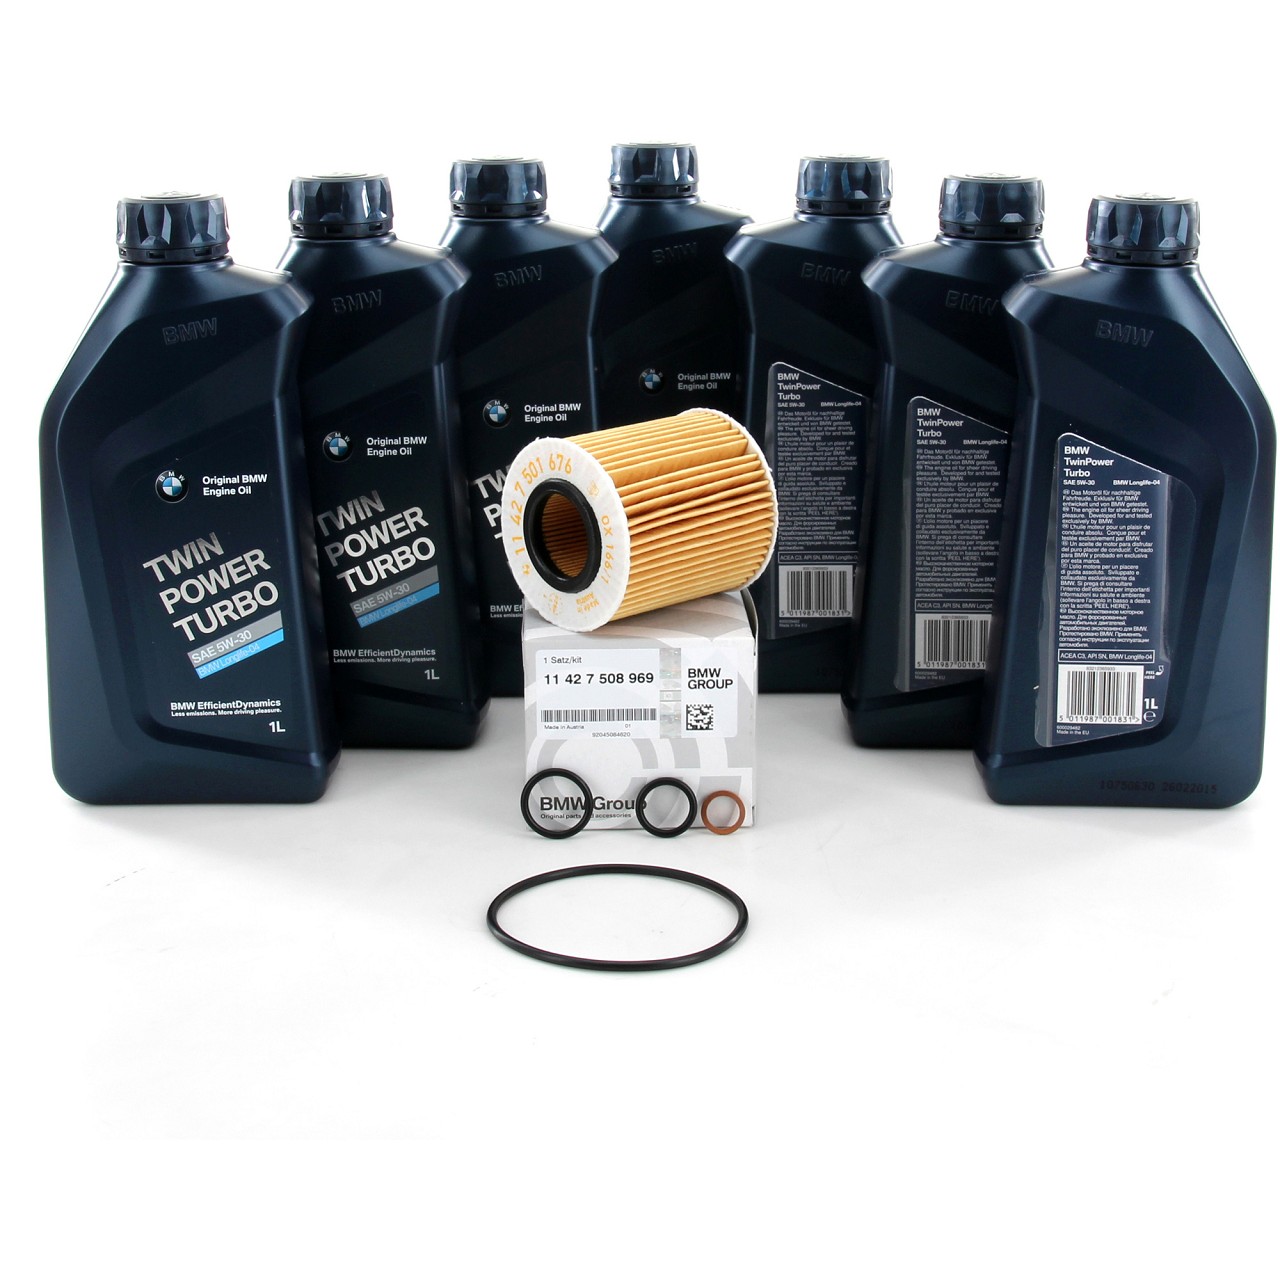 ORIGINAL BMW Motoröl Öl 5W30 LongLife-04 7 Liter + Ölfilter 11427508969